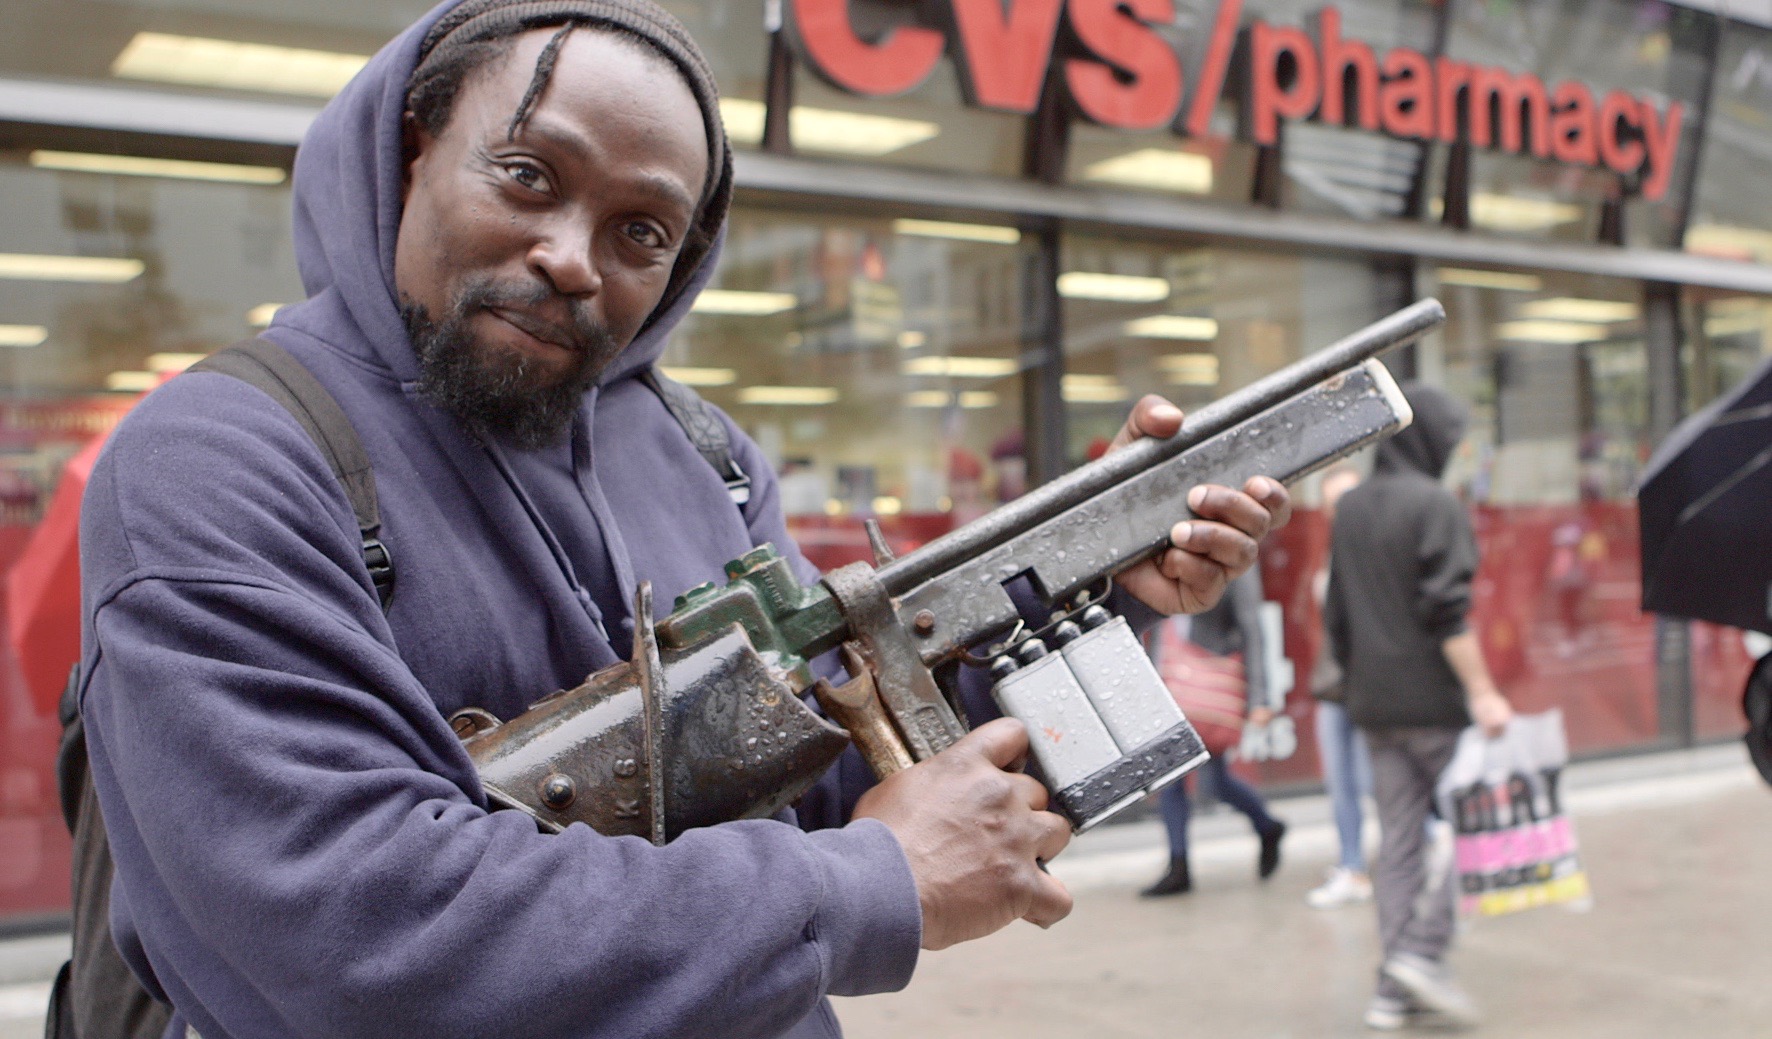 Man with gun NYC. 